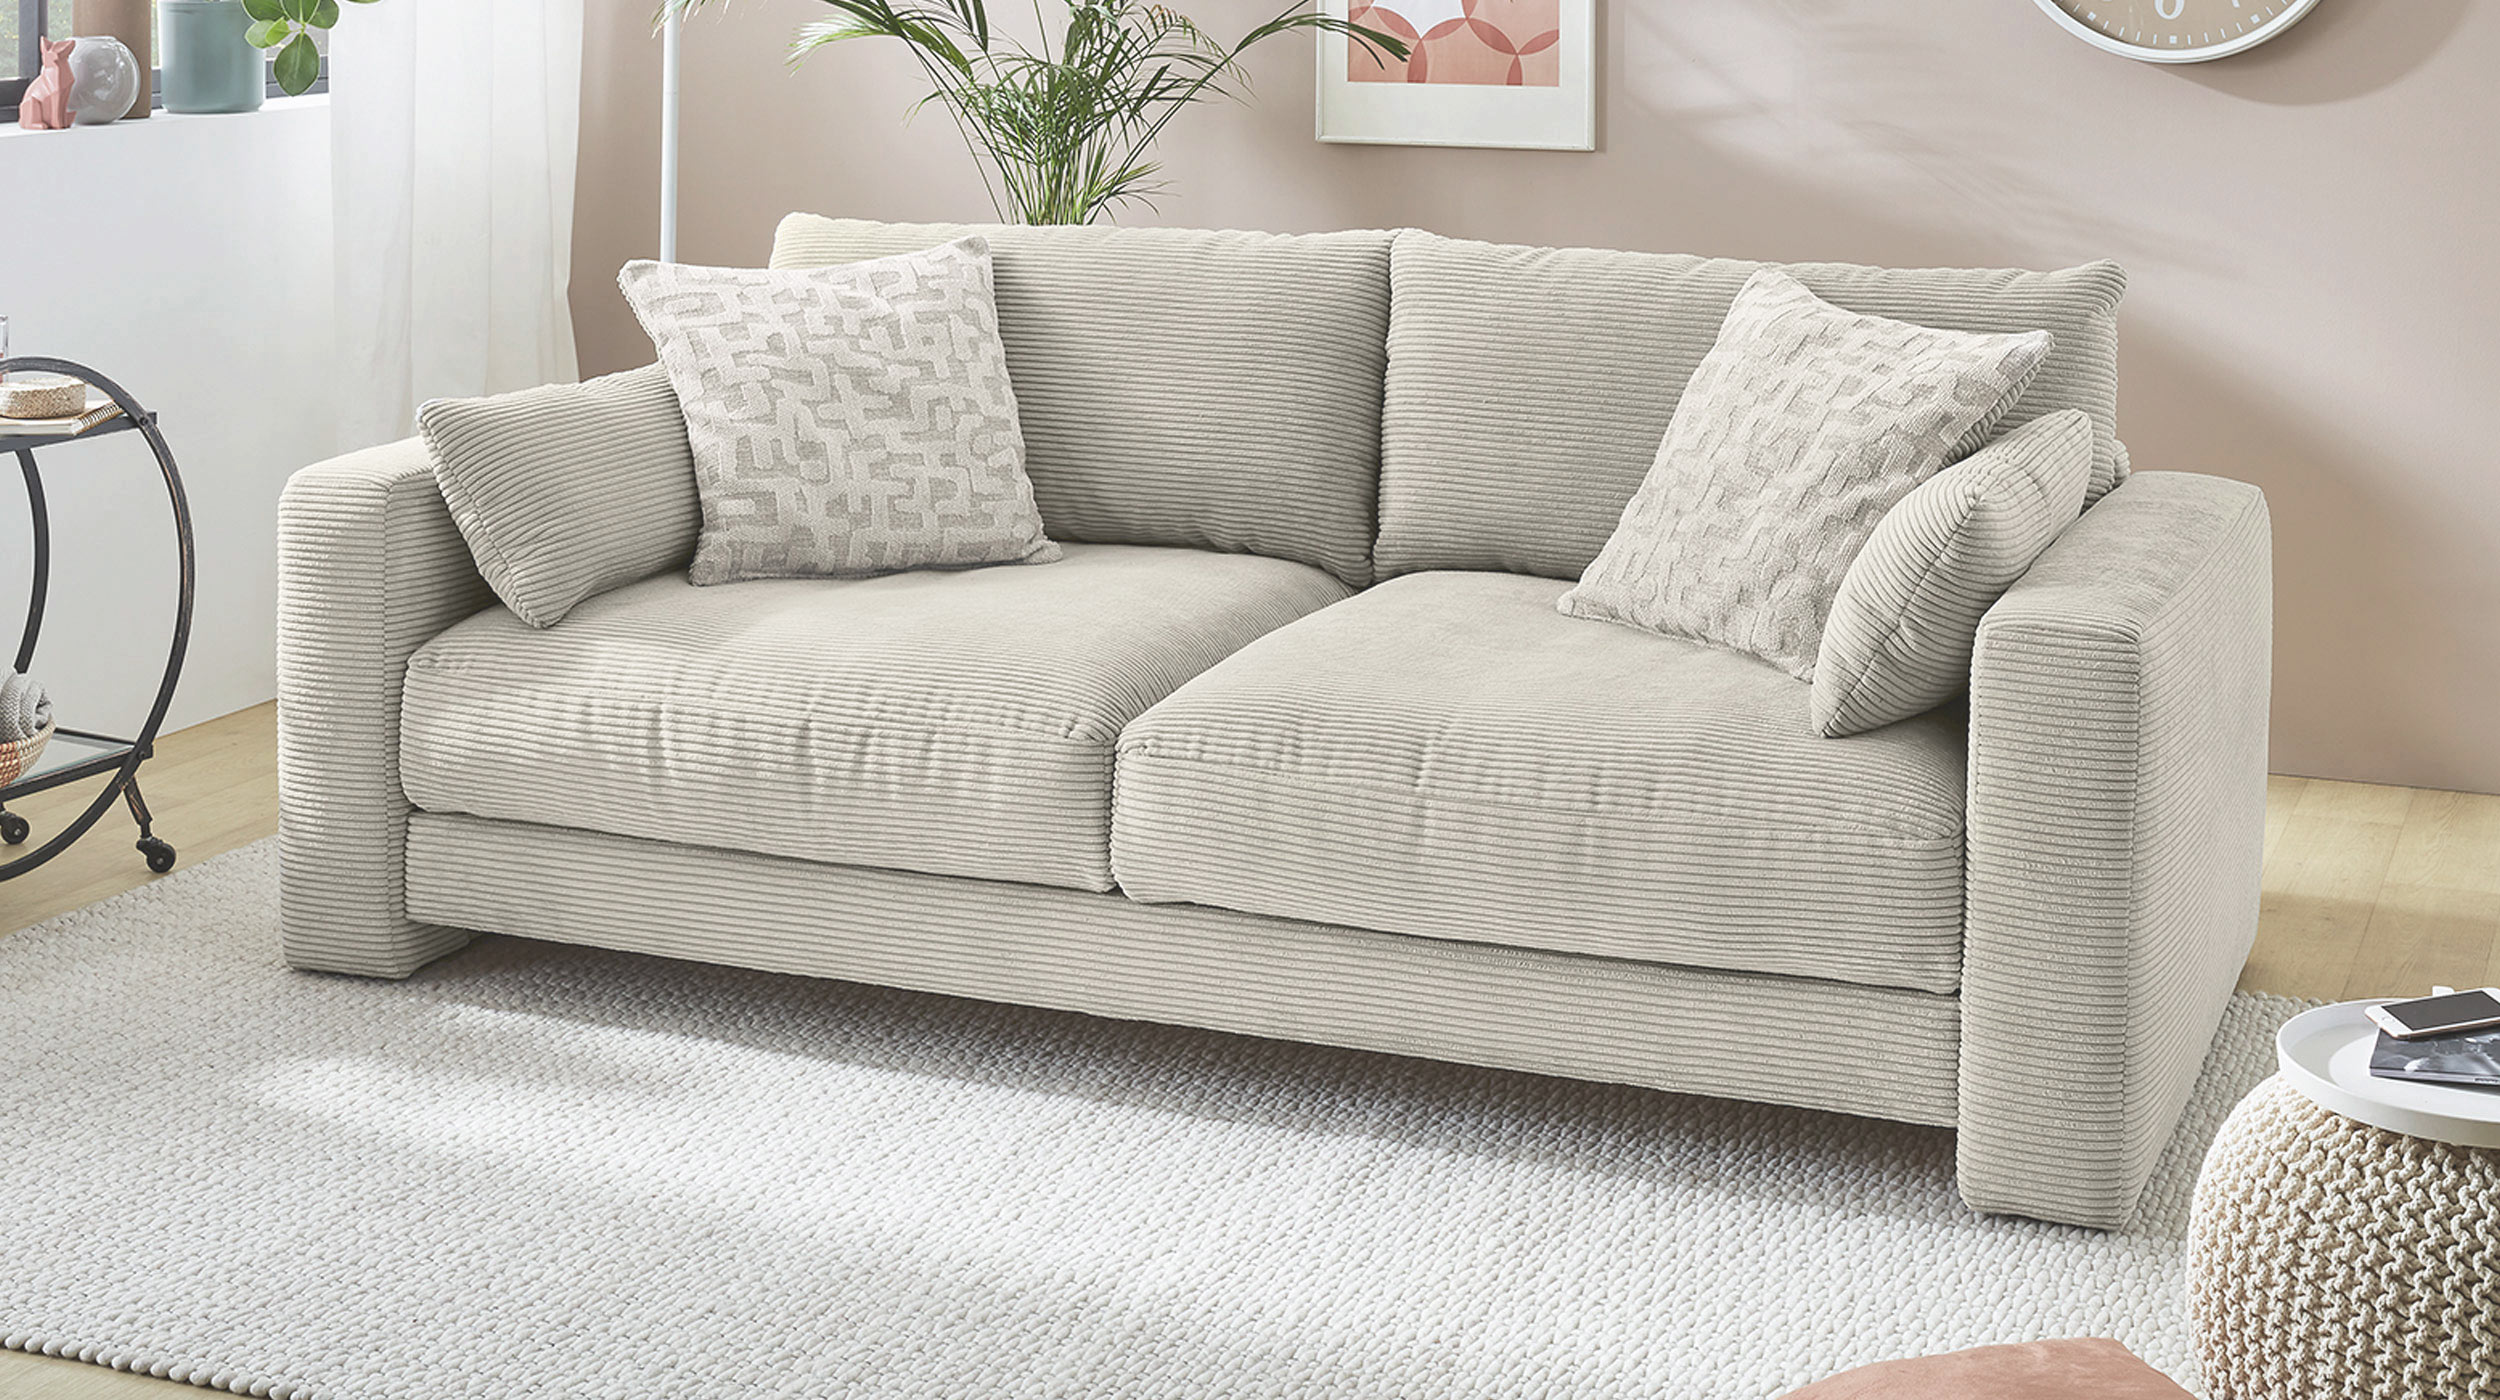 Big Sofa grau-beige Cord 241 cm Federkernpolsterung - MILEY